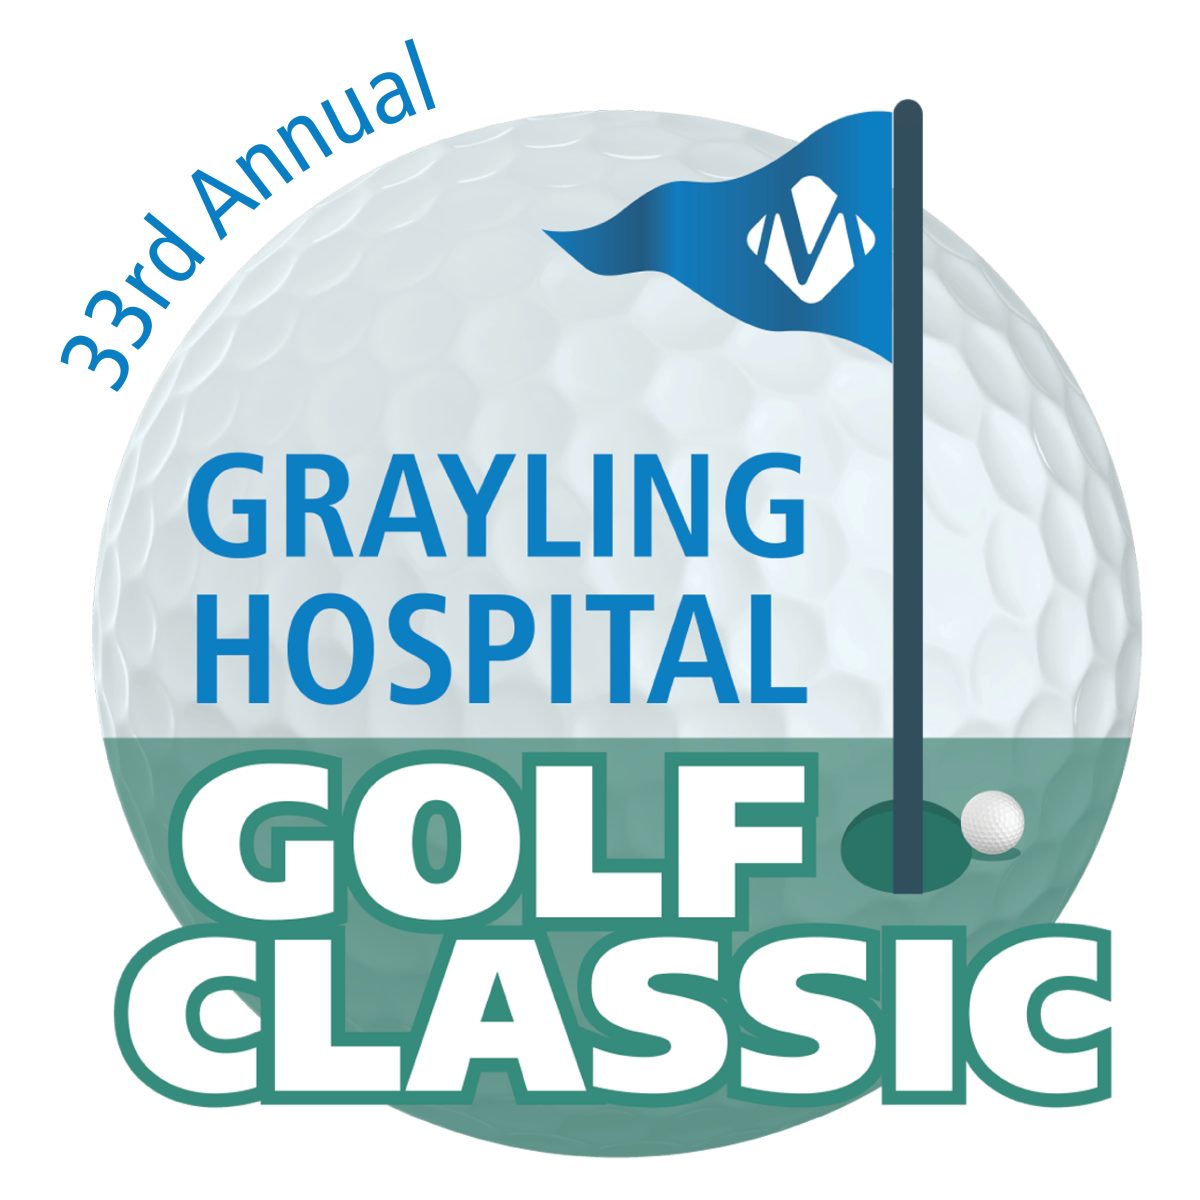 33rd annual grayling hospital golf classic